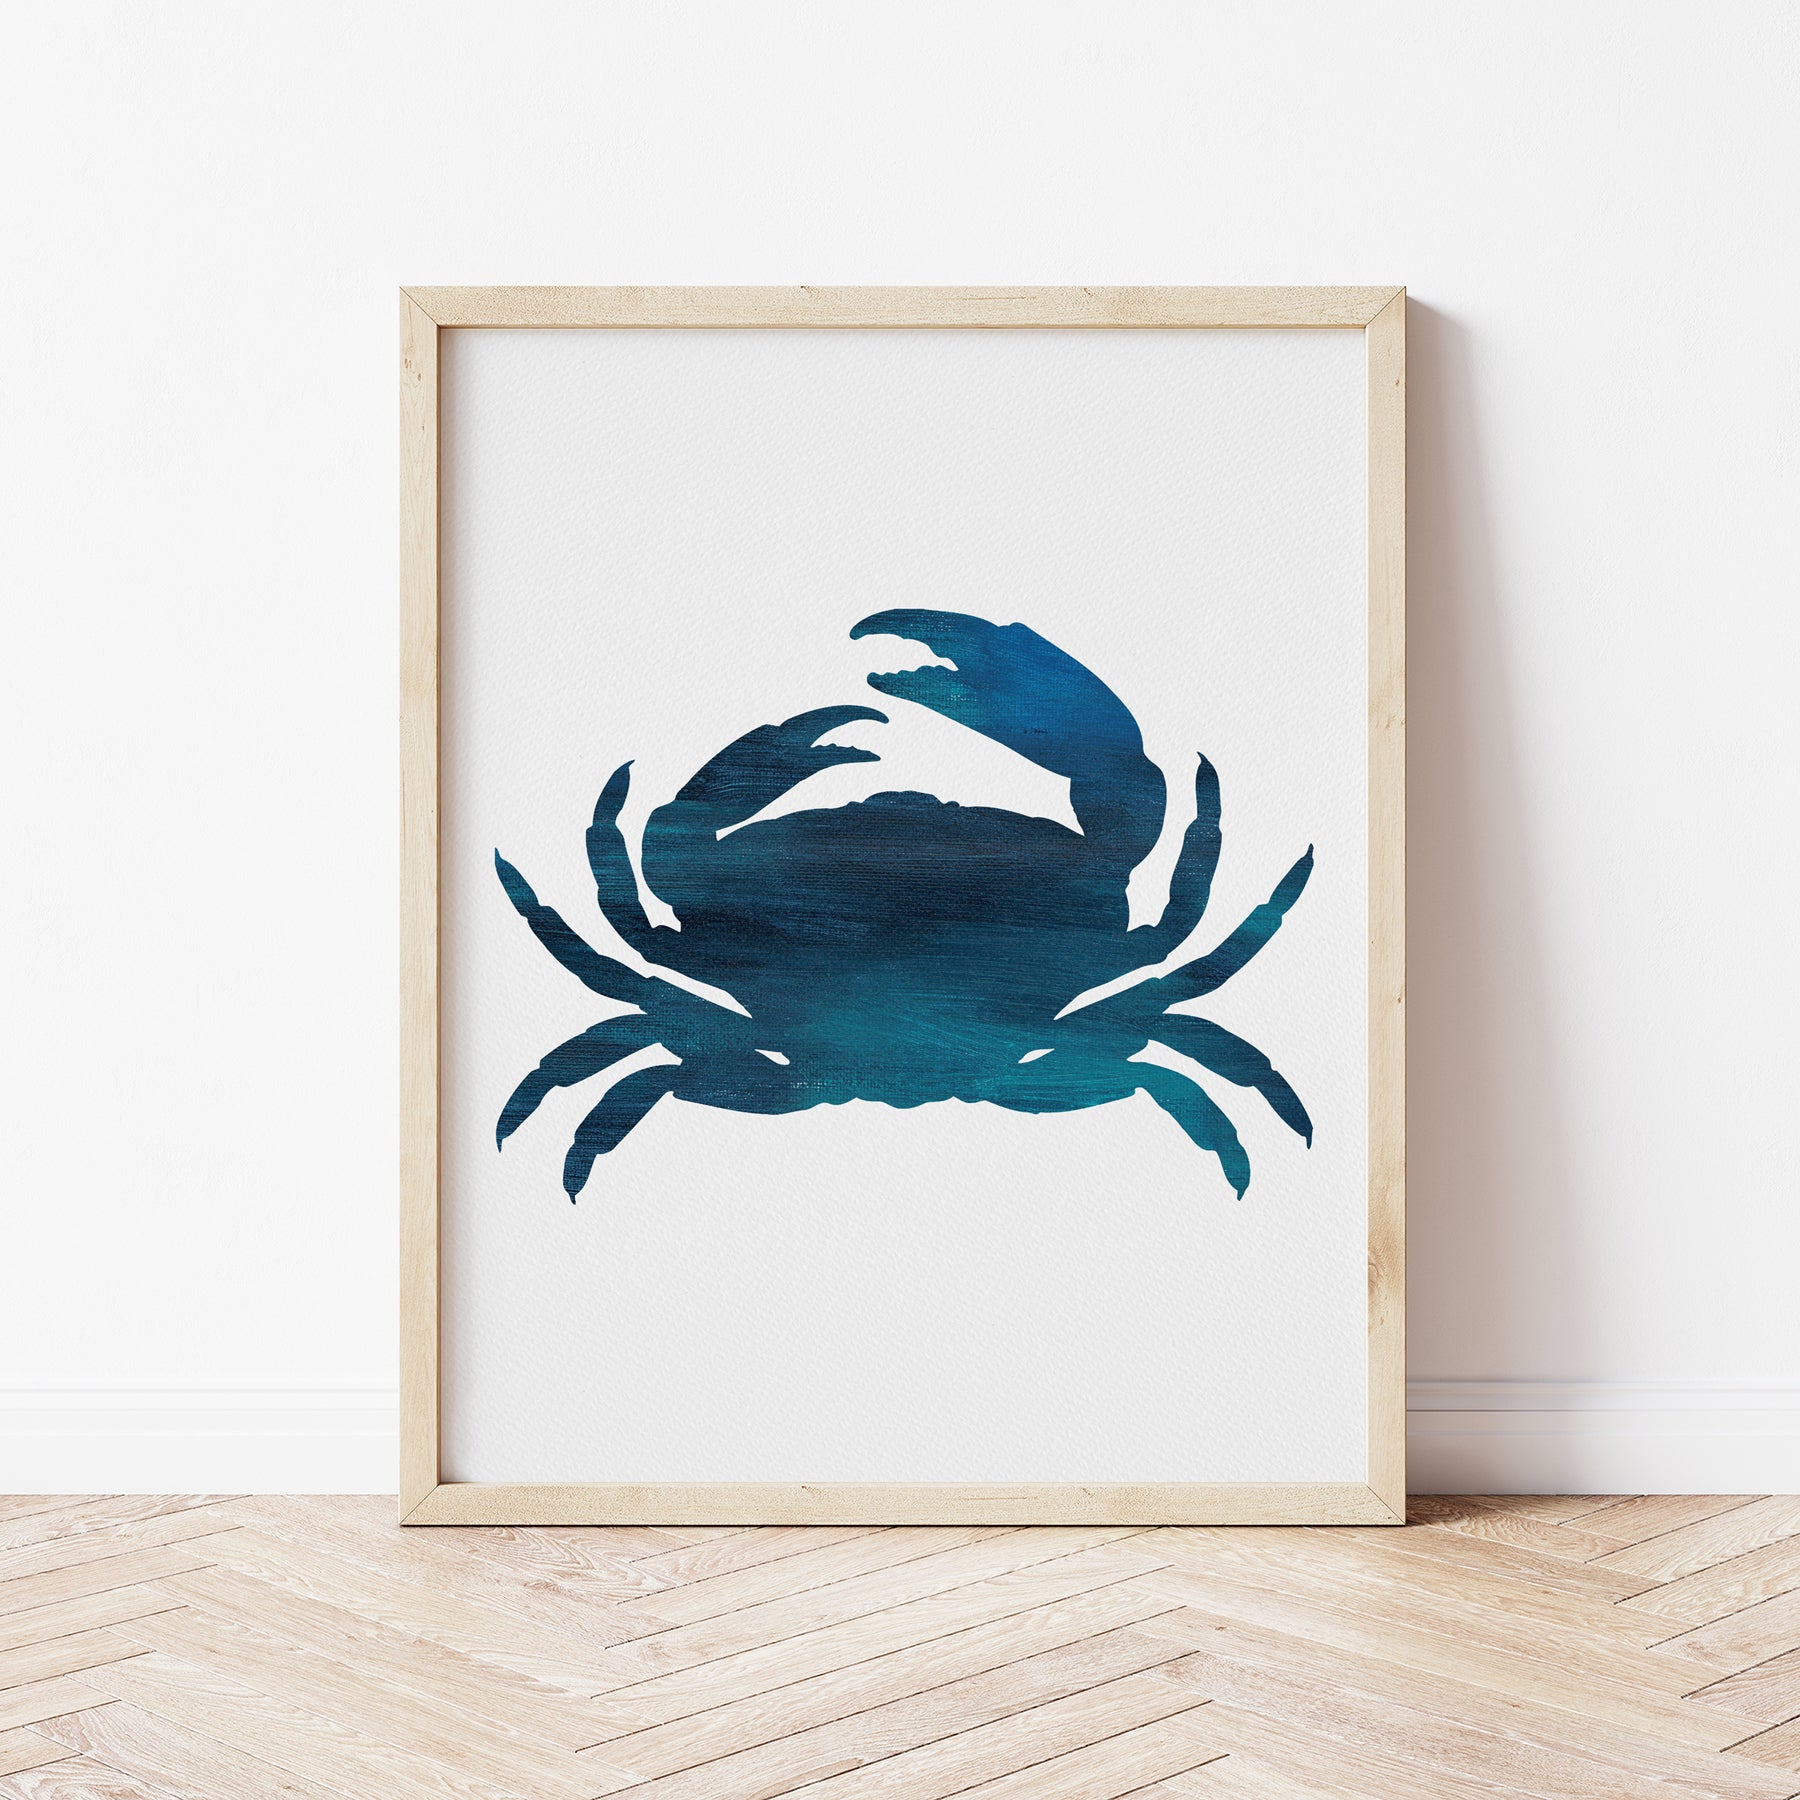 Blue crab art print by Gert & Co